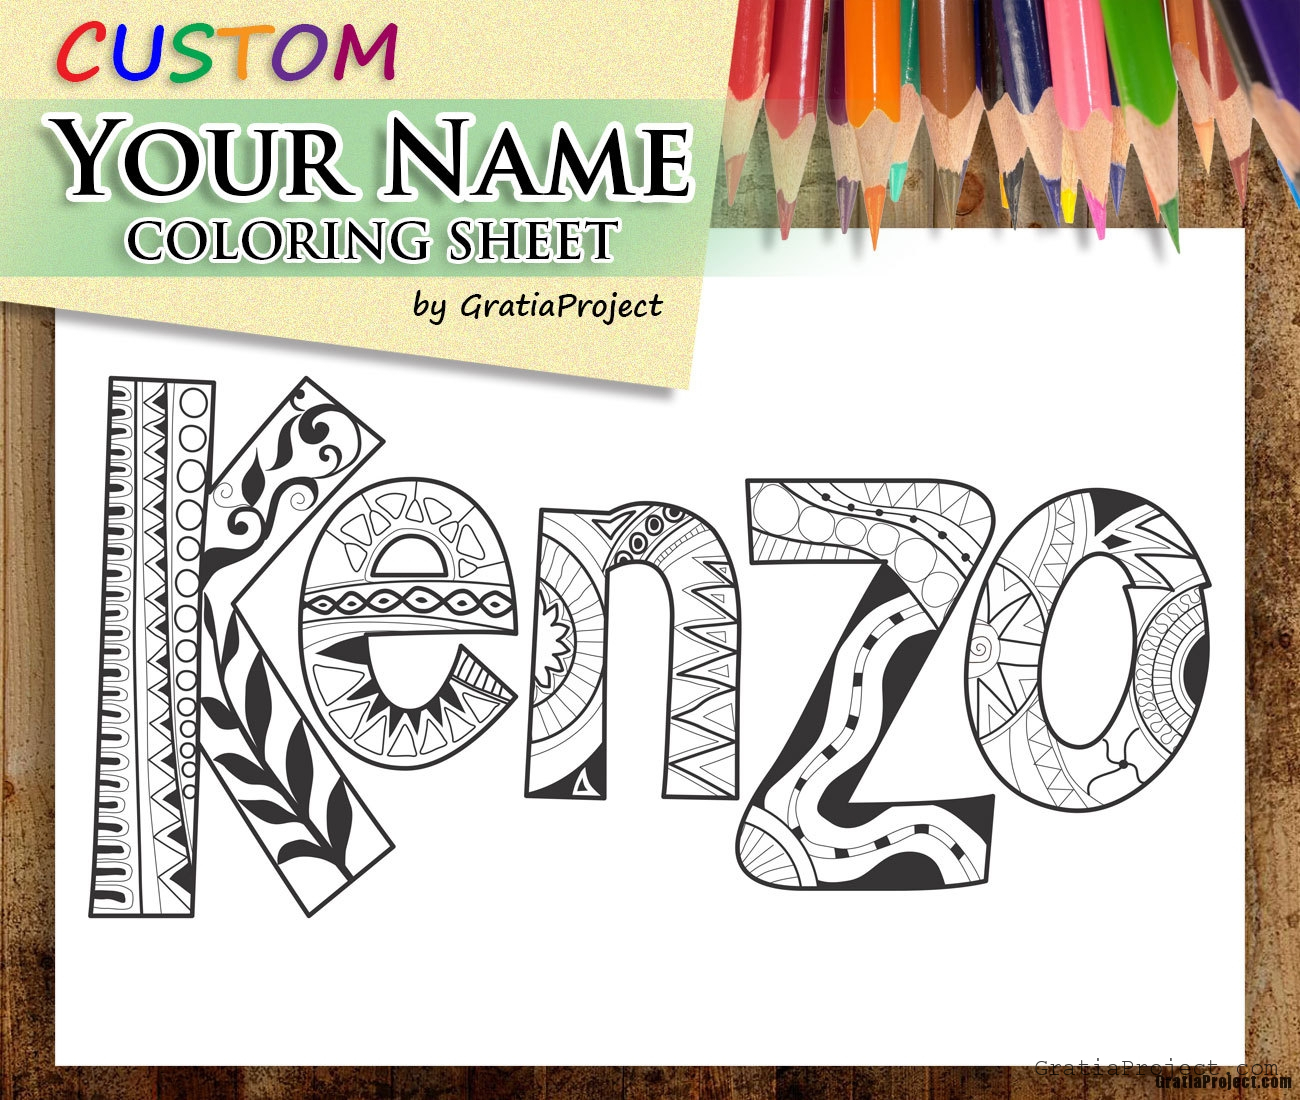 Custom - Your Name coloring sheet